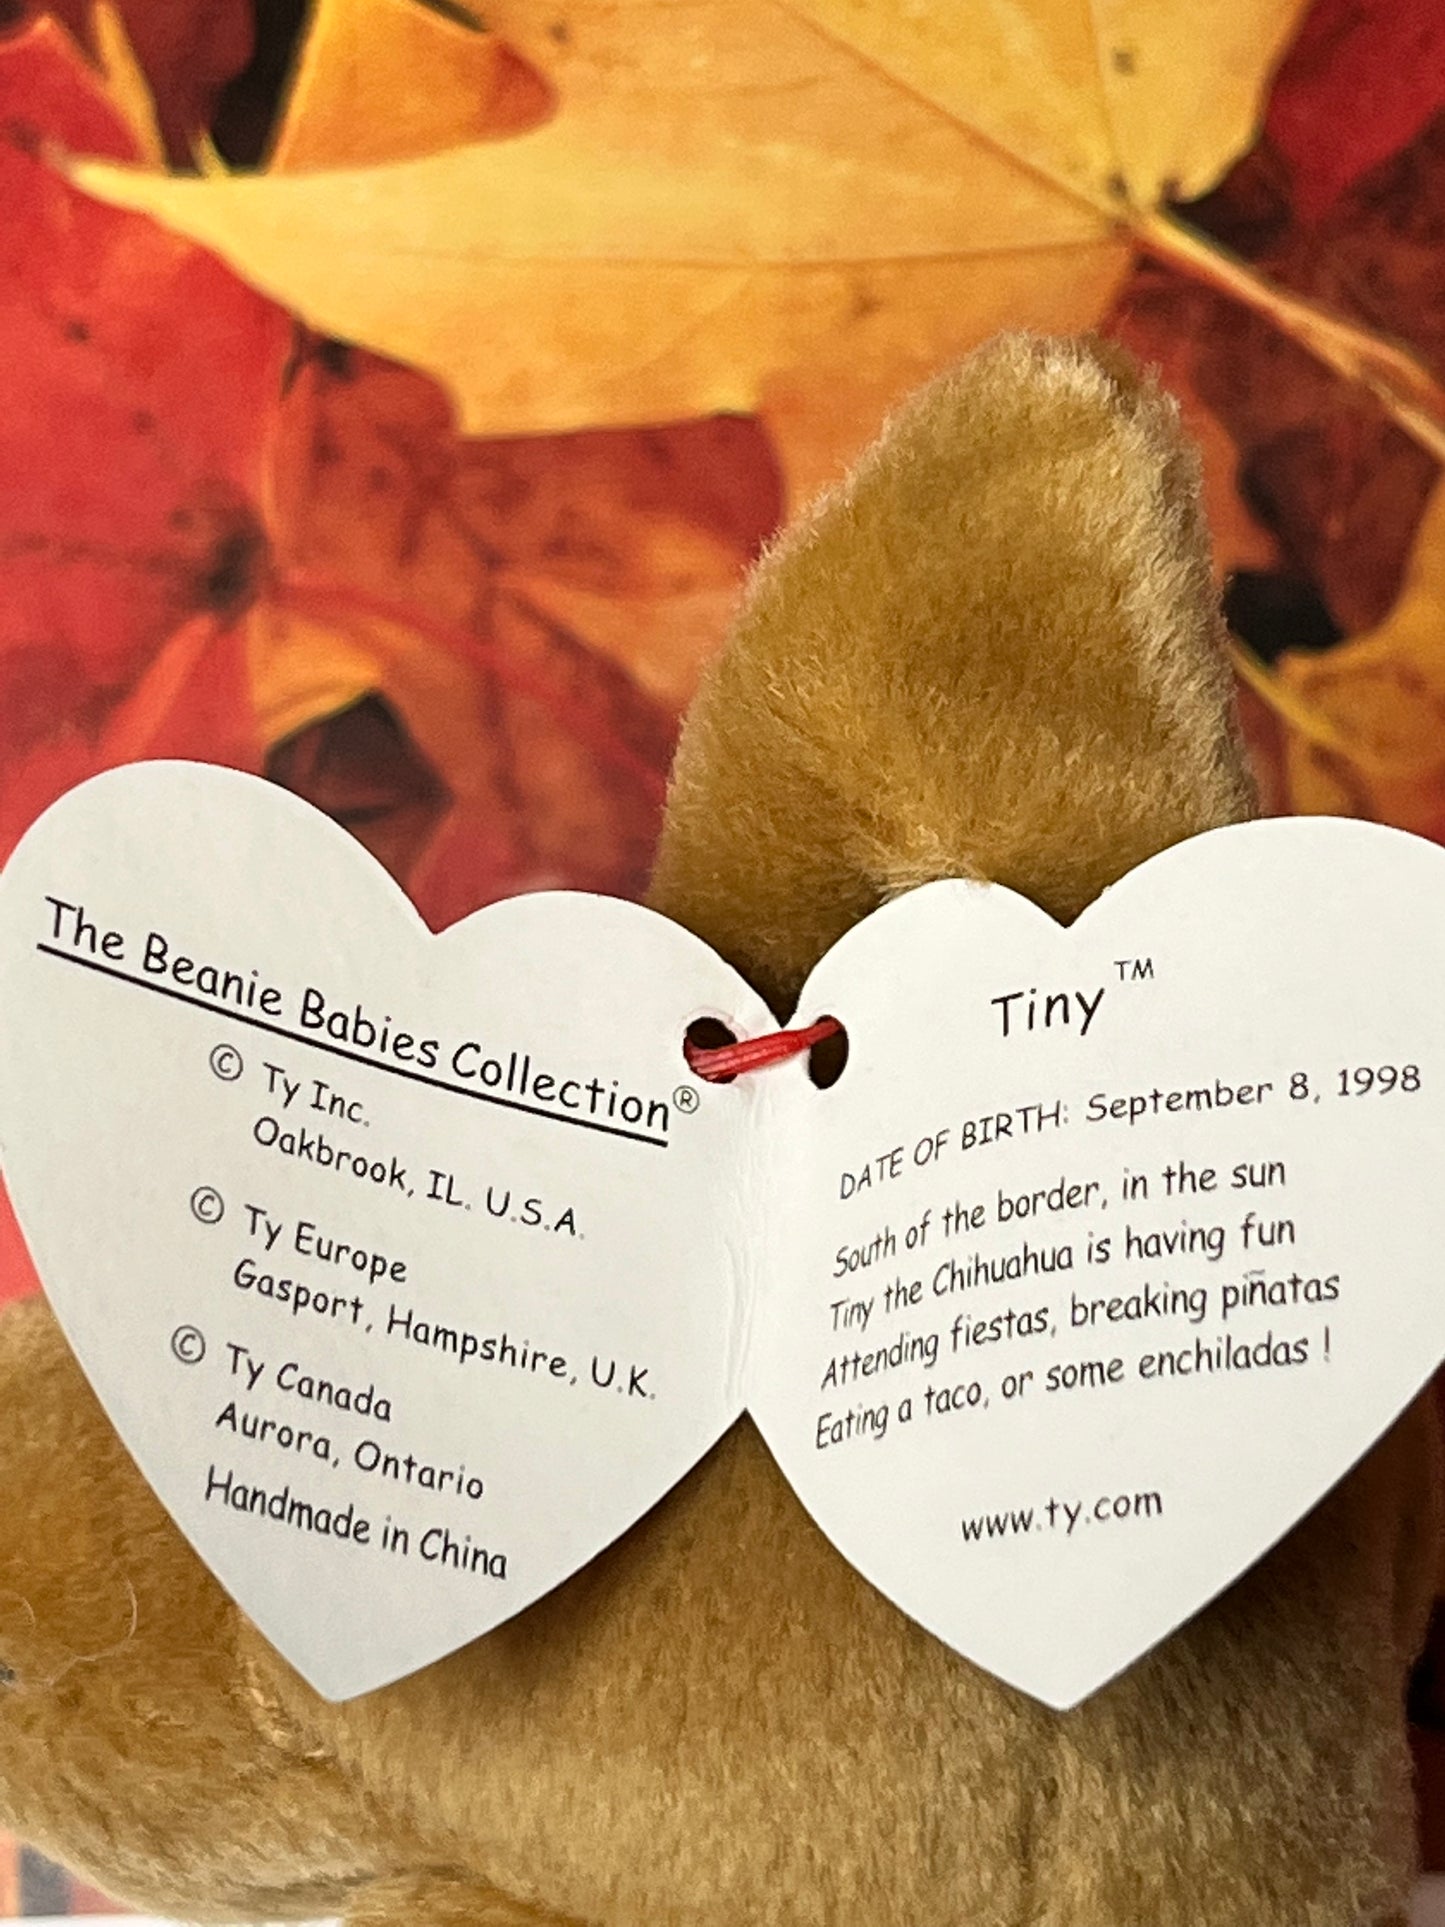 Ty Beanie Babies “Tiny” The Chihuahua, September 8 1998